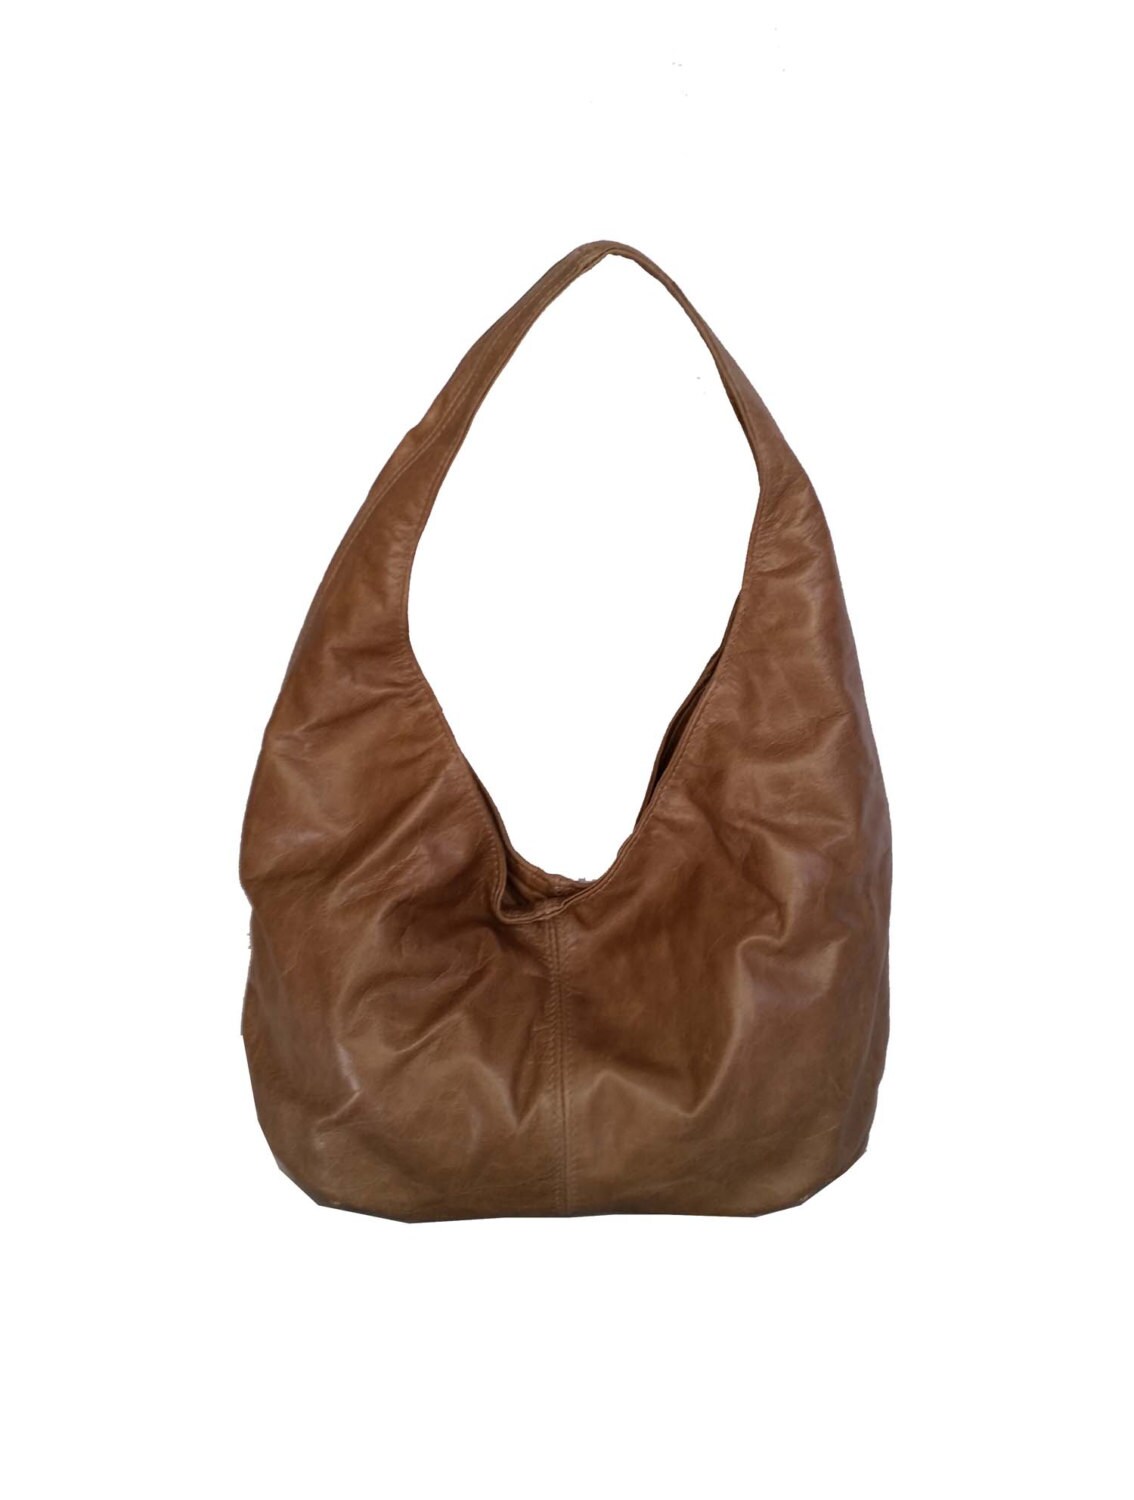 Distressed leather bag / casual shoulder handbag / by Fgalaze